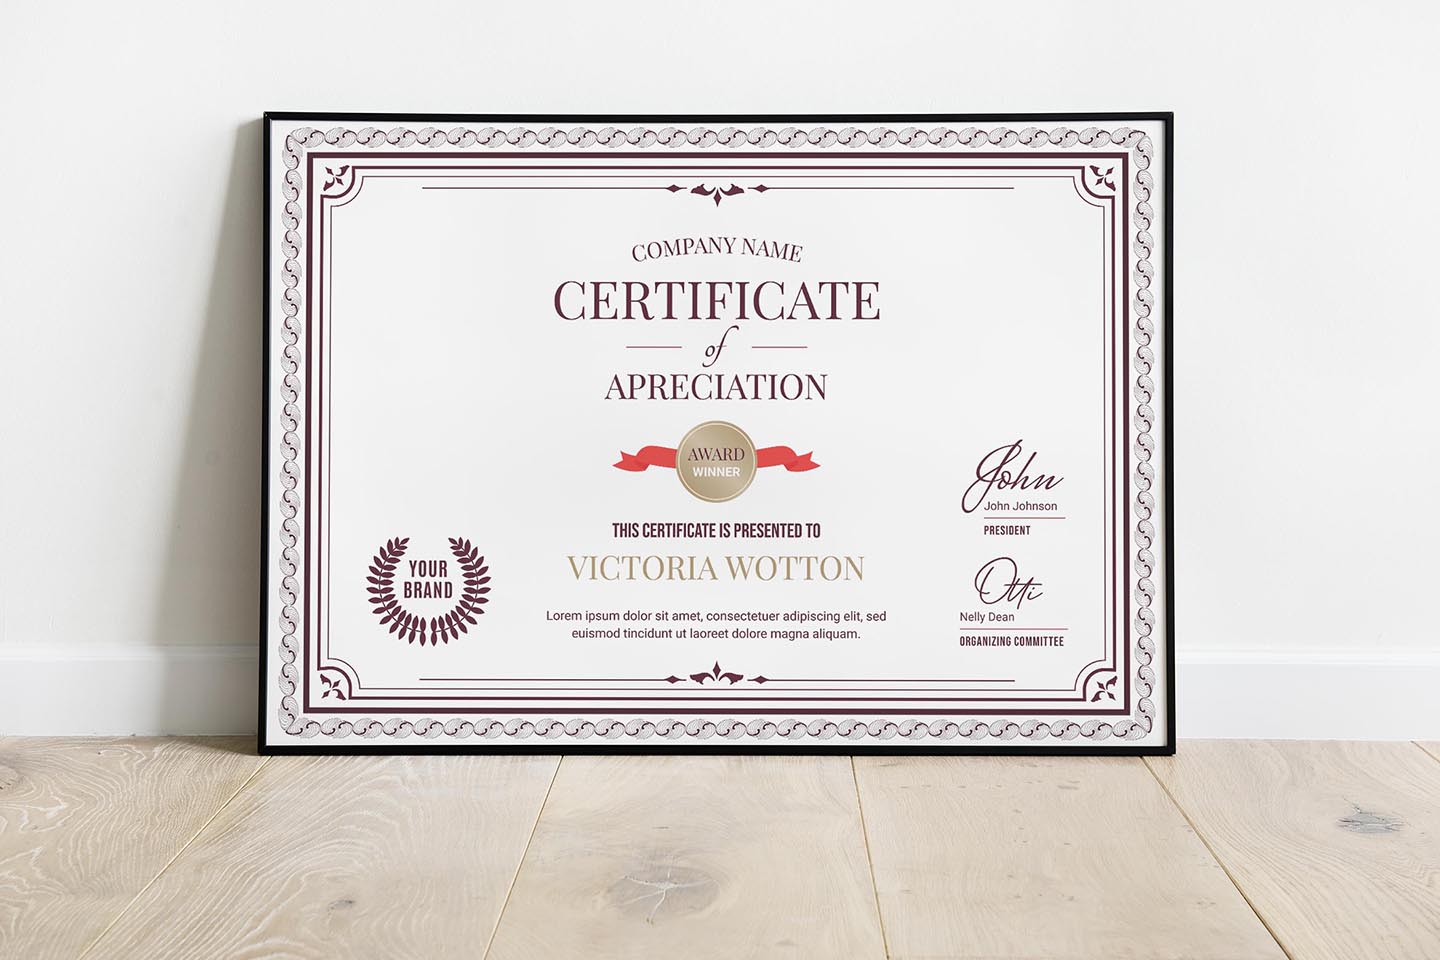 Certificate Template for & Illustrator [PSD, Ai, Vector]